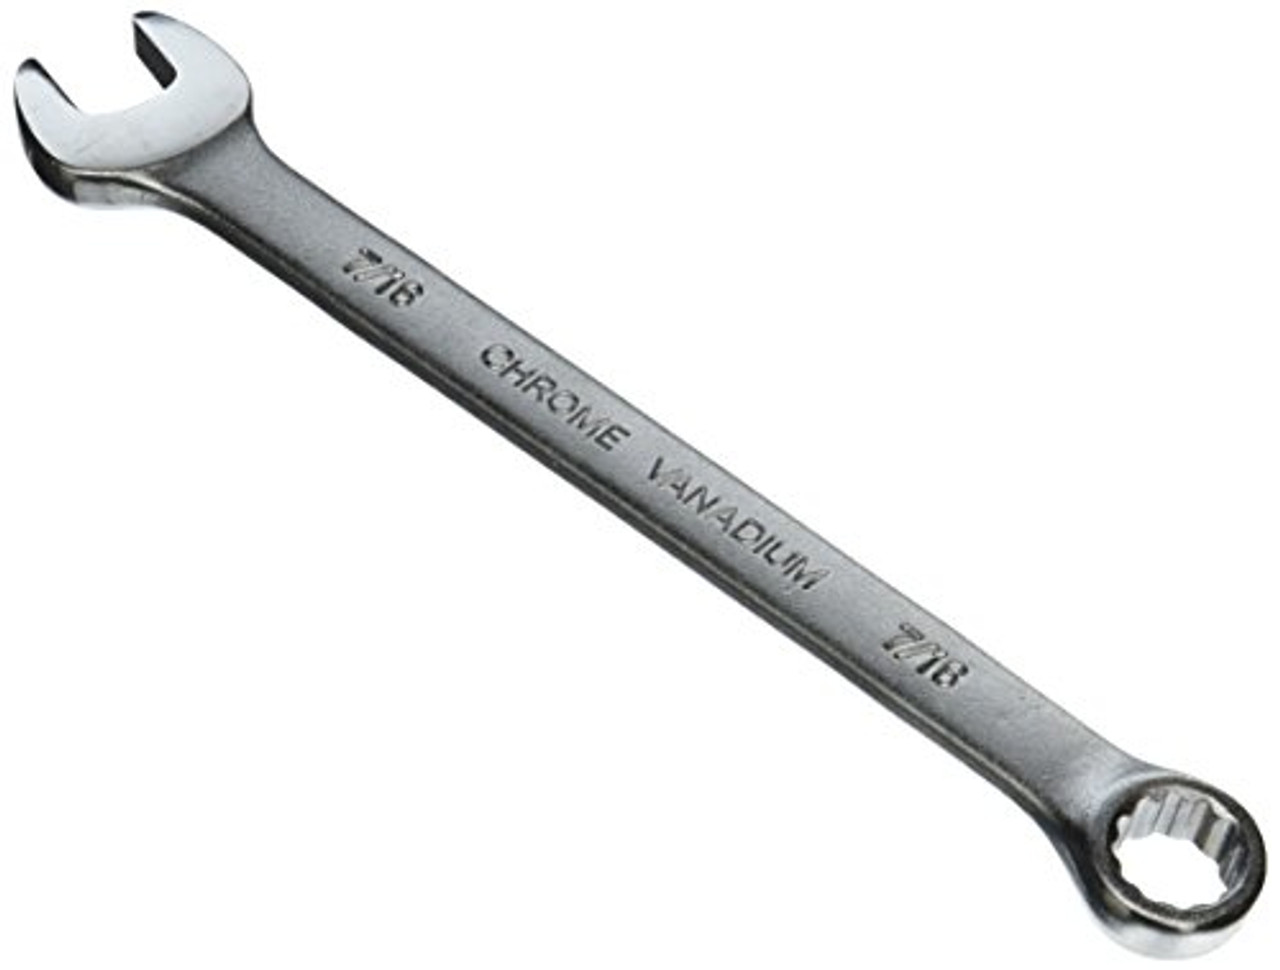 VULCAN (7956949) Combo Wrench, SAE 7/16-Inch